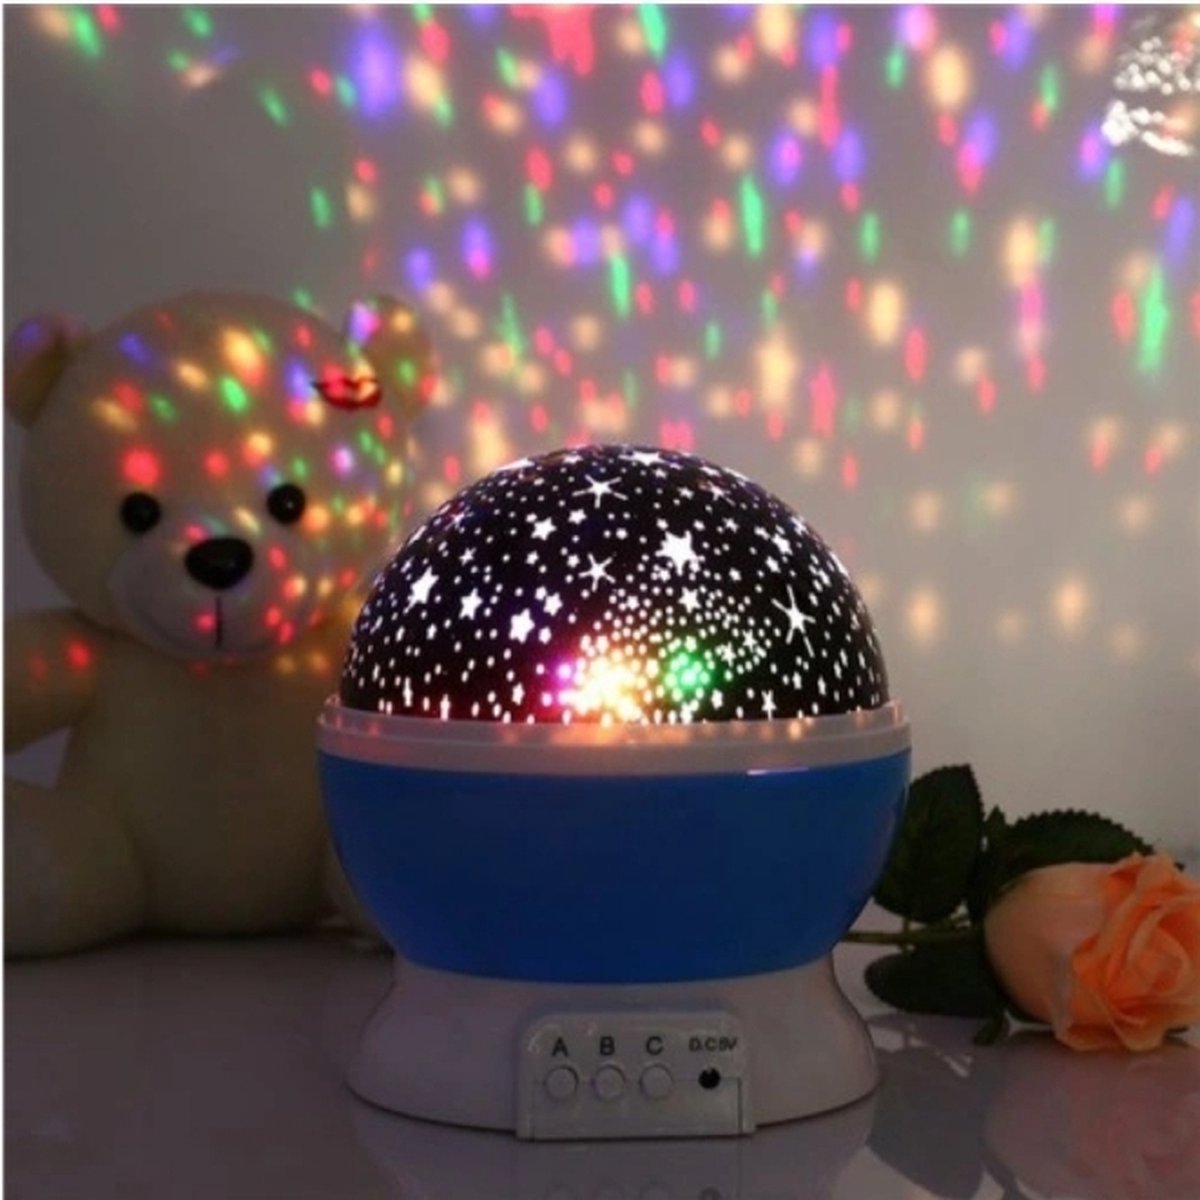 <tc>Ariko</tc> Rotating Star Projector Starry Sky - Night Light Baby/Child - Projection Lamp - Children's Room - Night Light - Blue